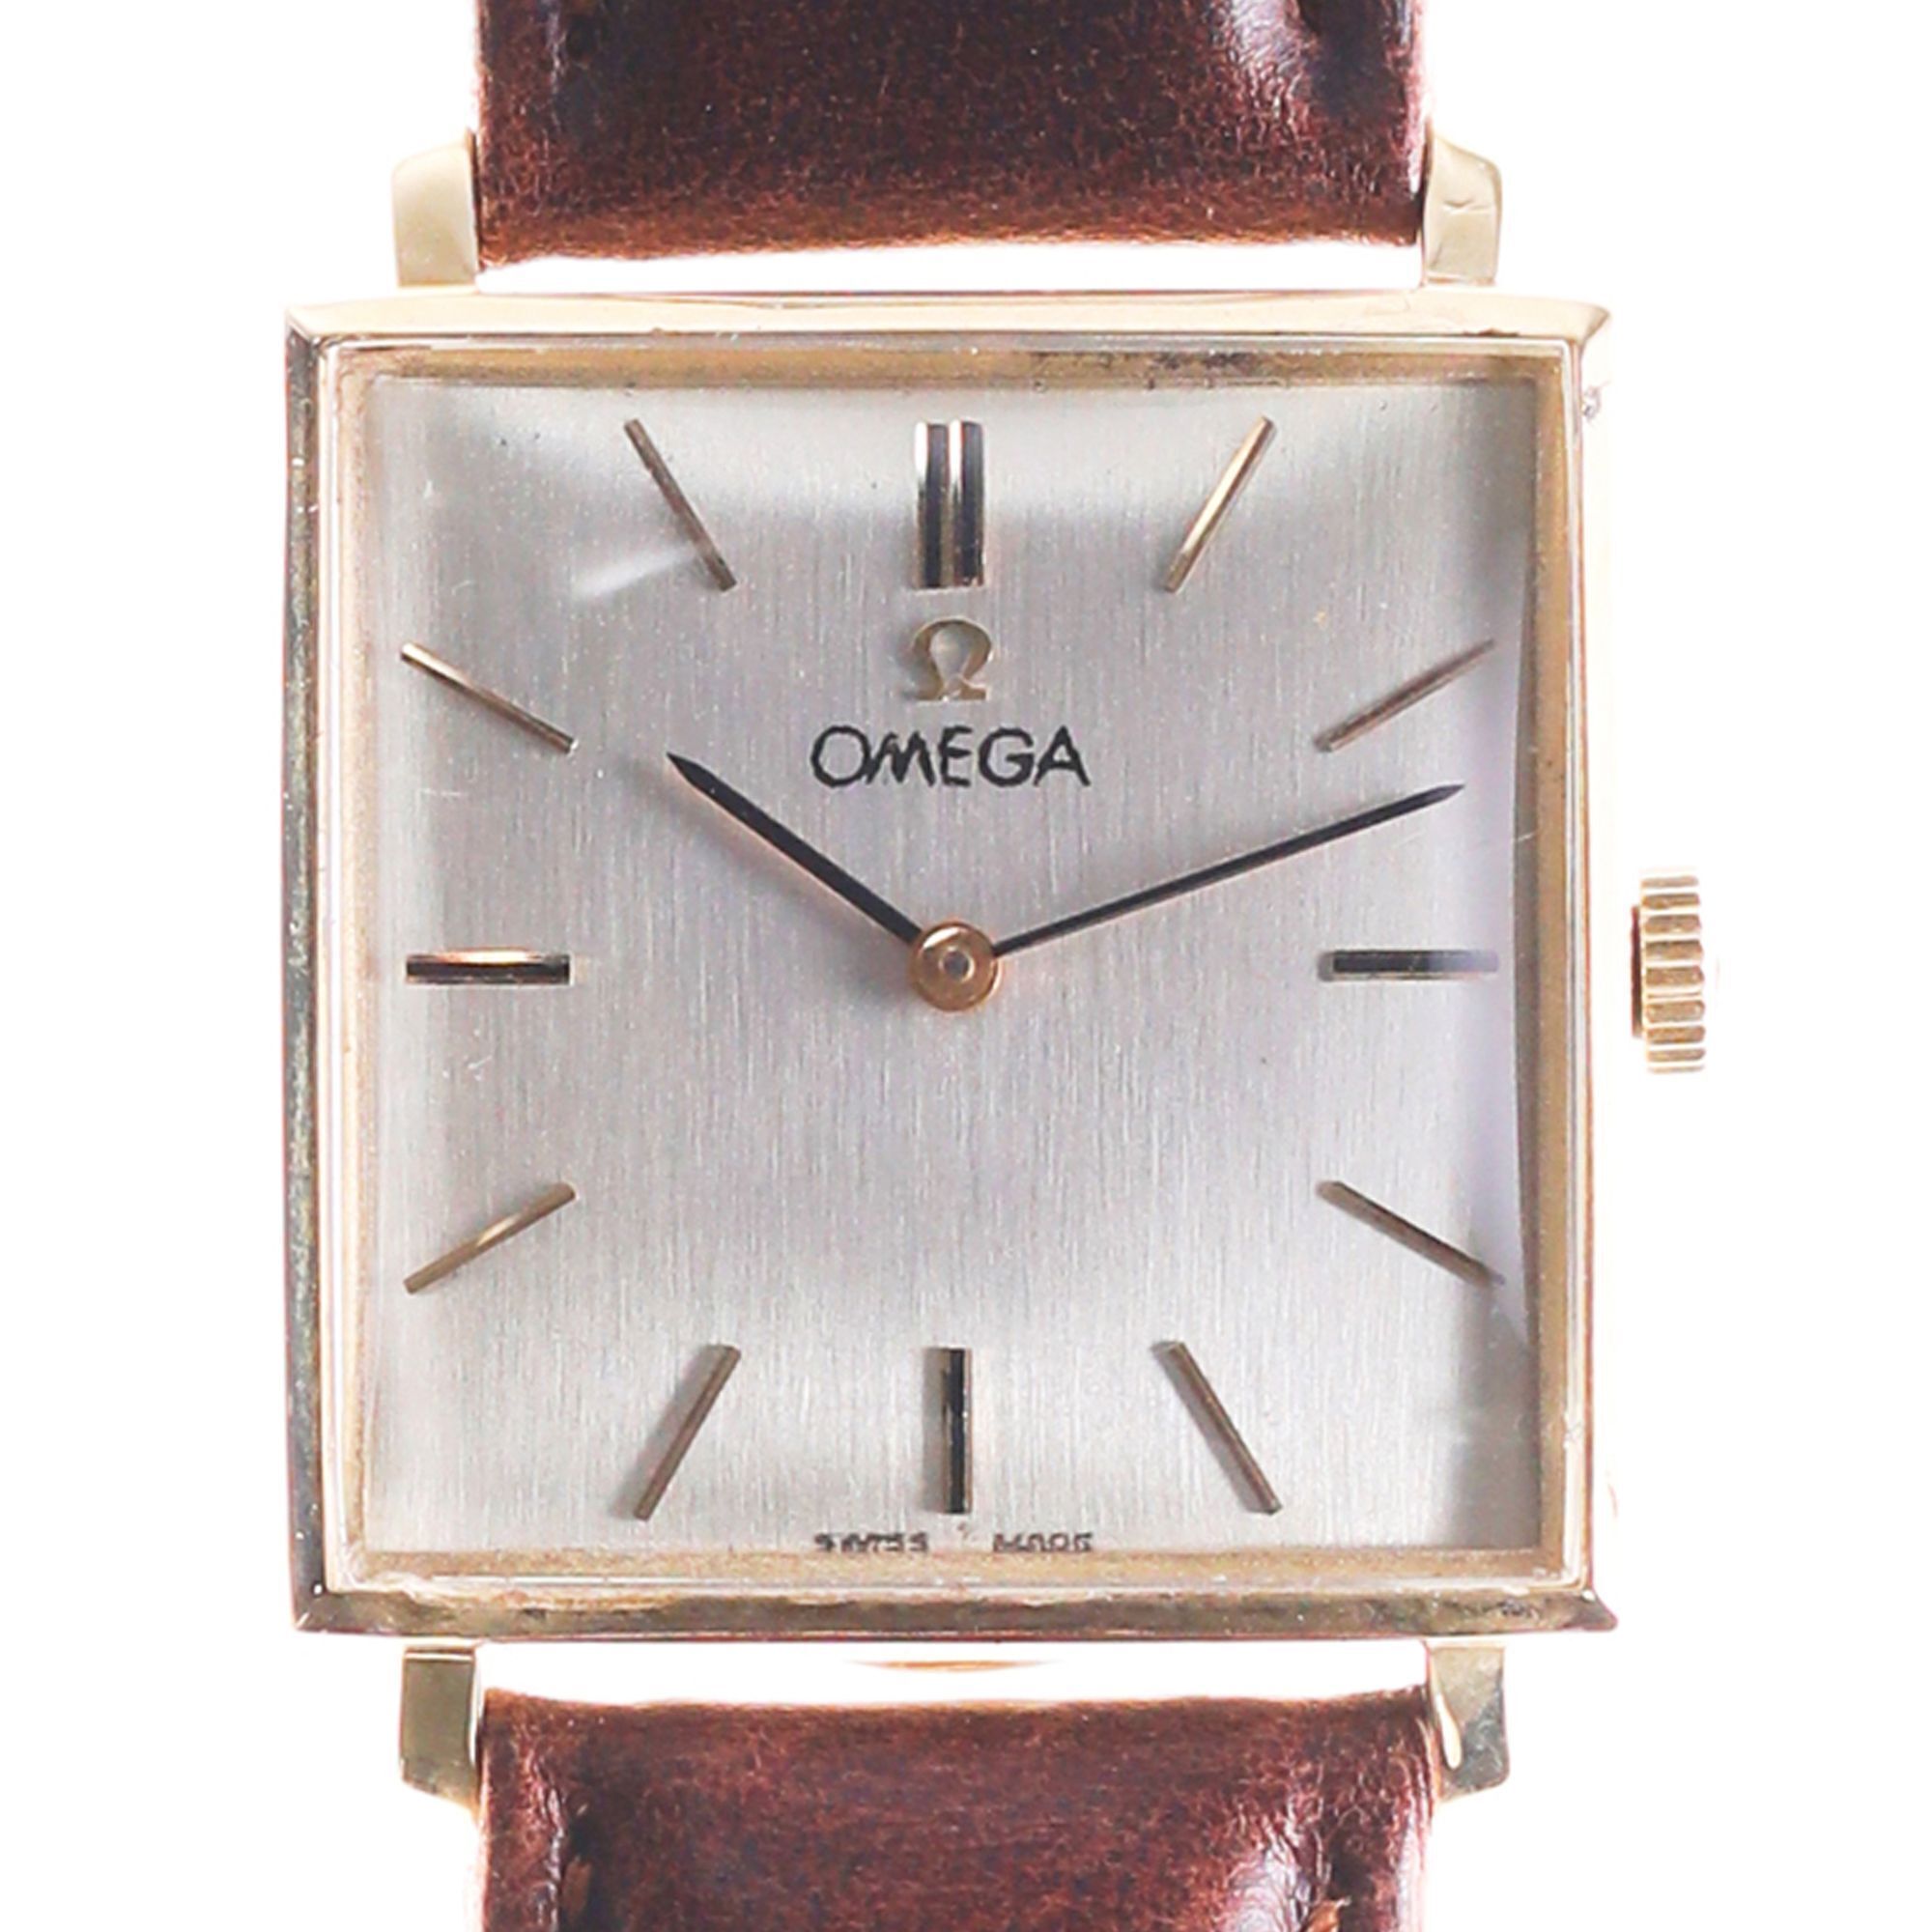 Omega 14K Gold Square Ref. D6624 Men's Wristwatch